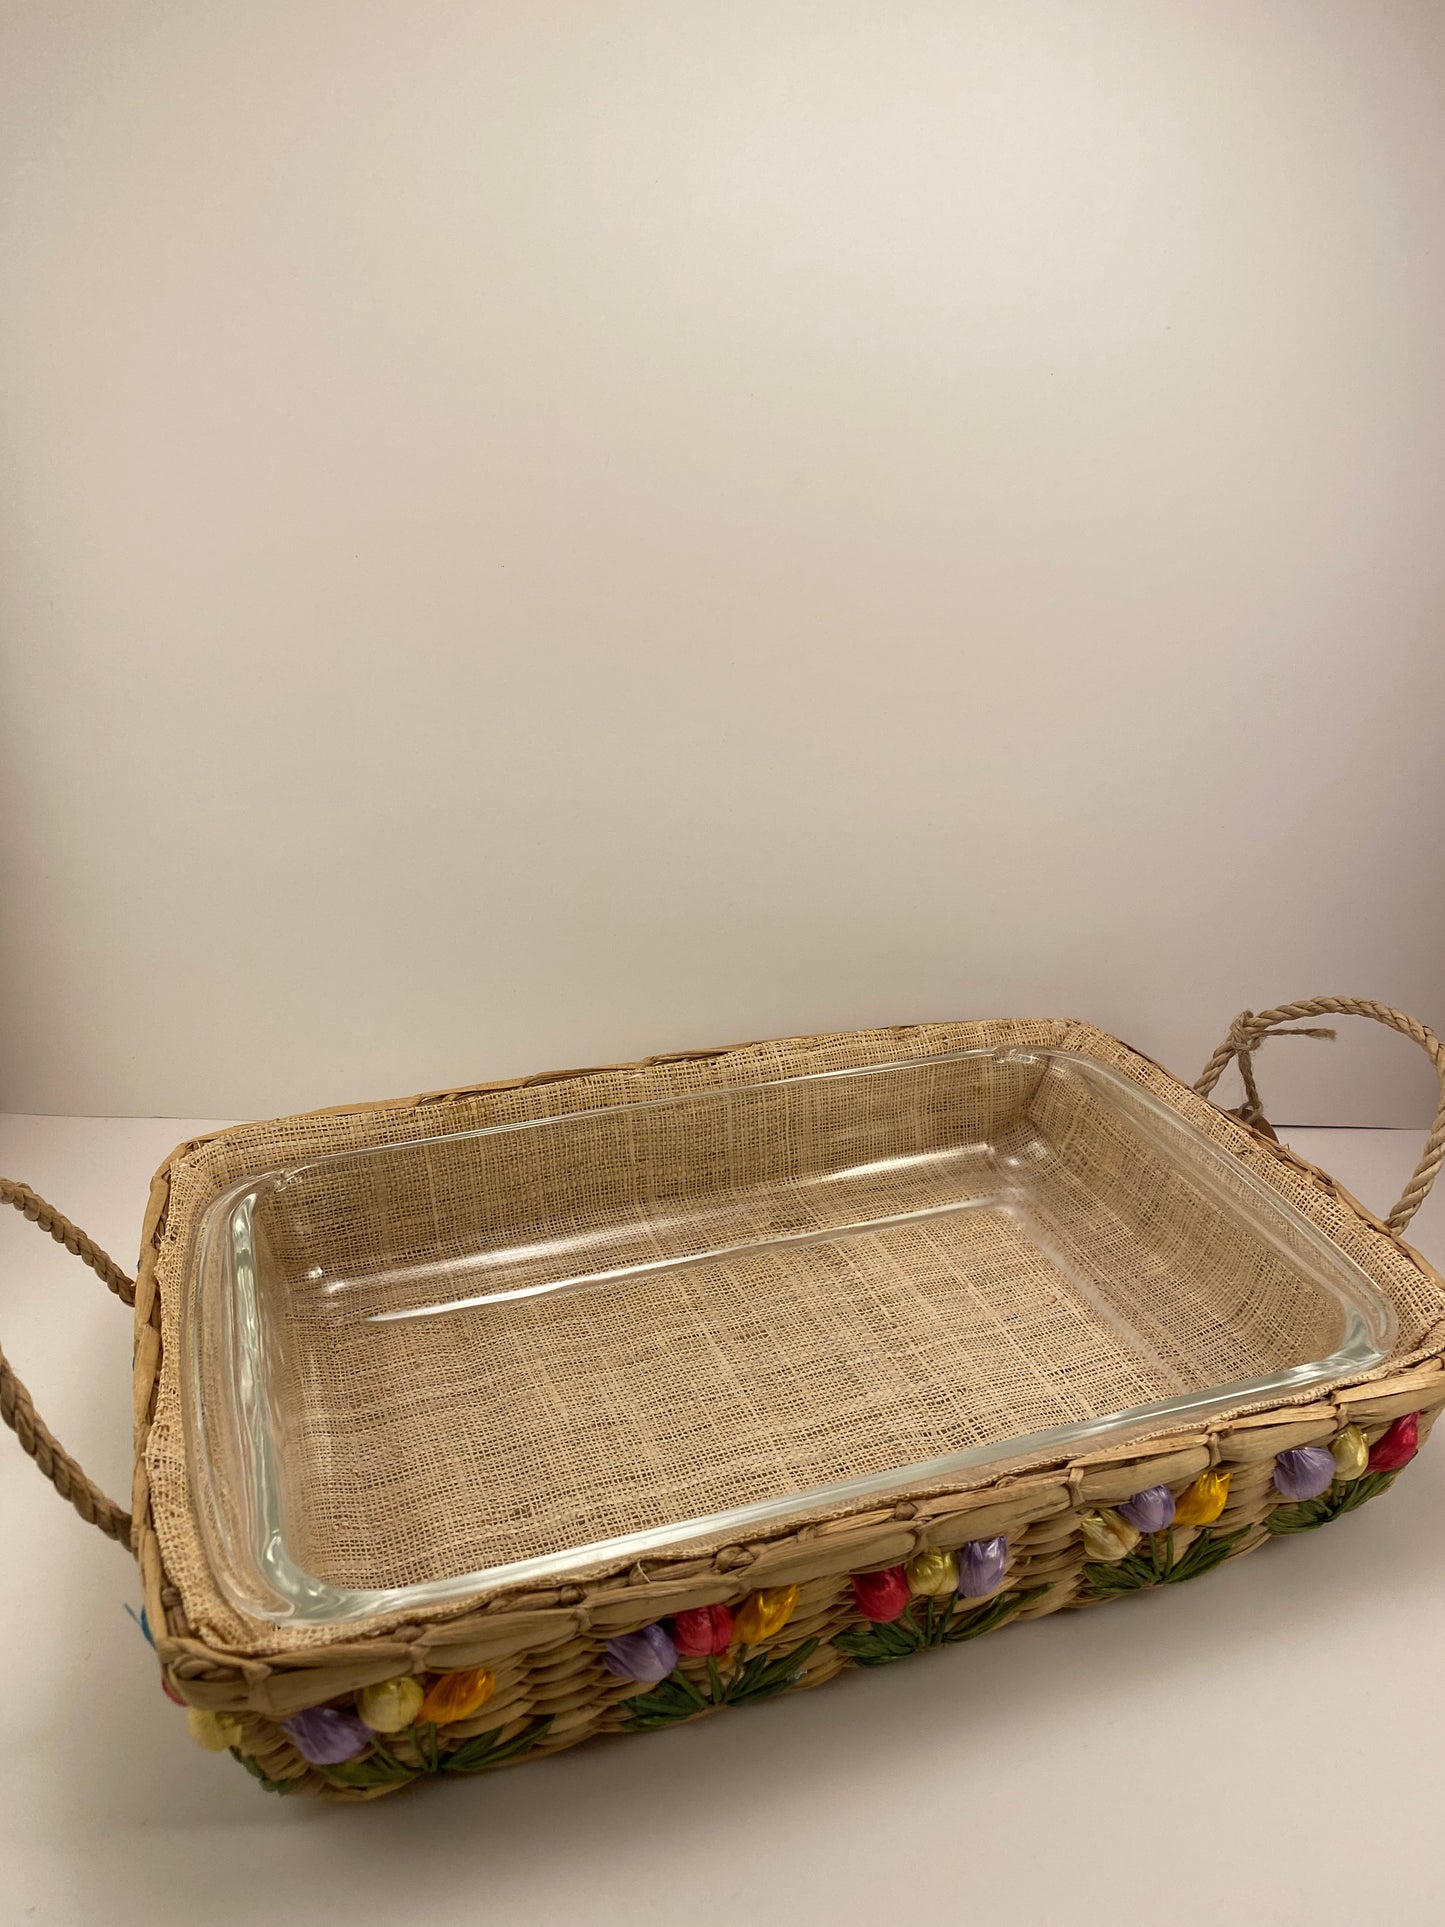 Vintage Seagrass Floral Raffia Pyrex Casserole Dish Basket Wicker 8x12” With Pyrex Casserole Dish